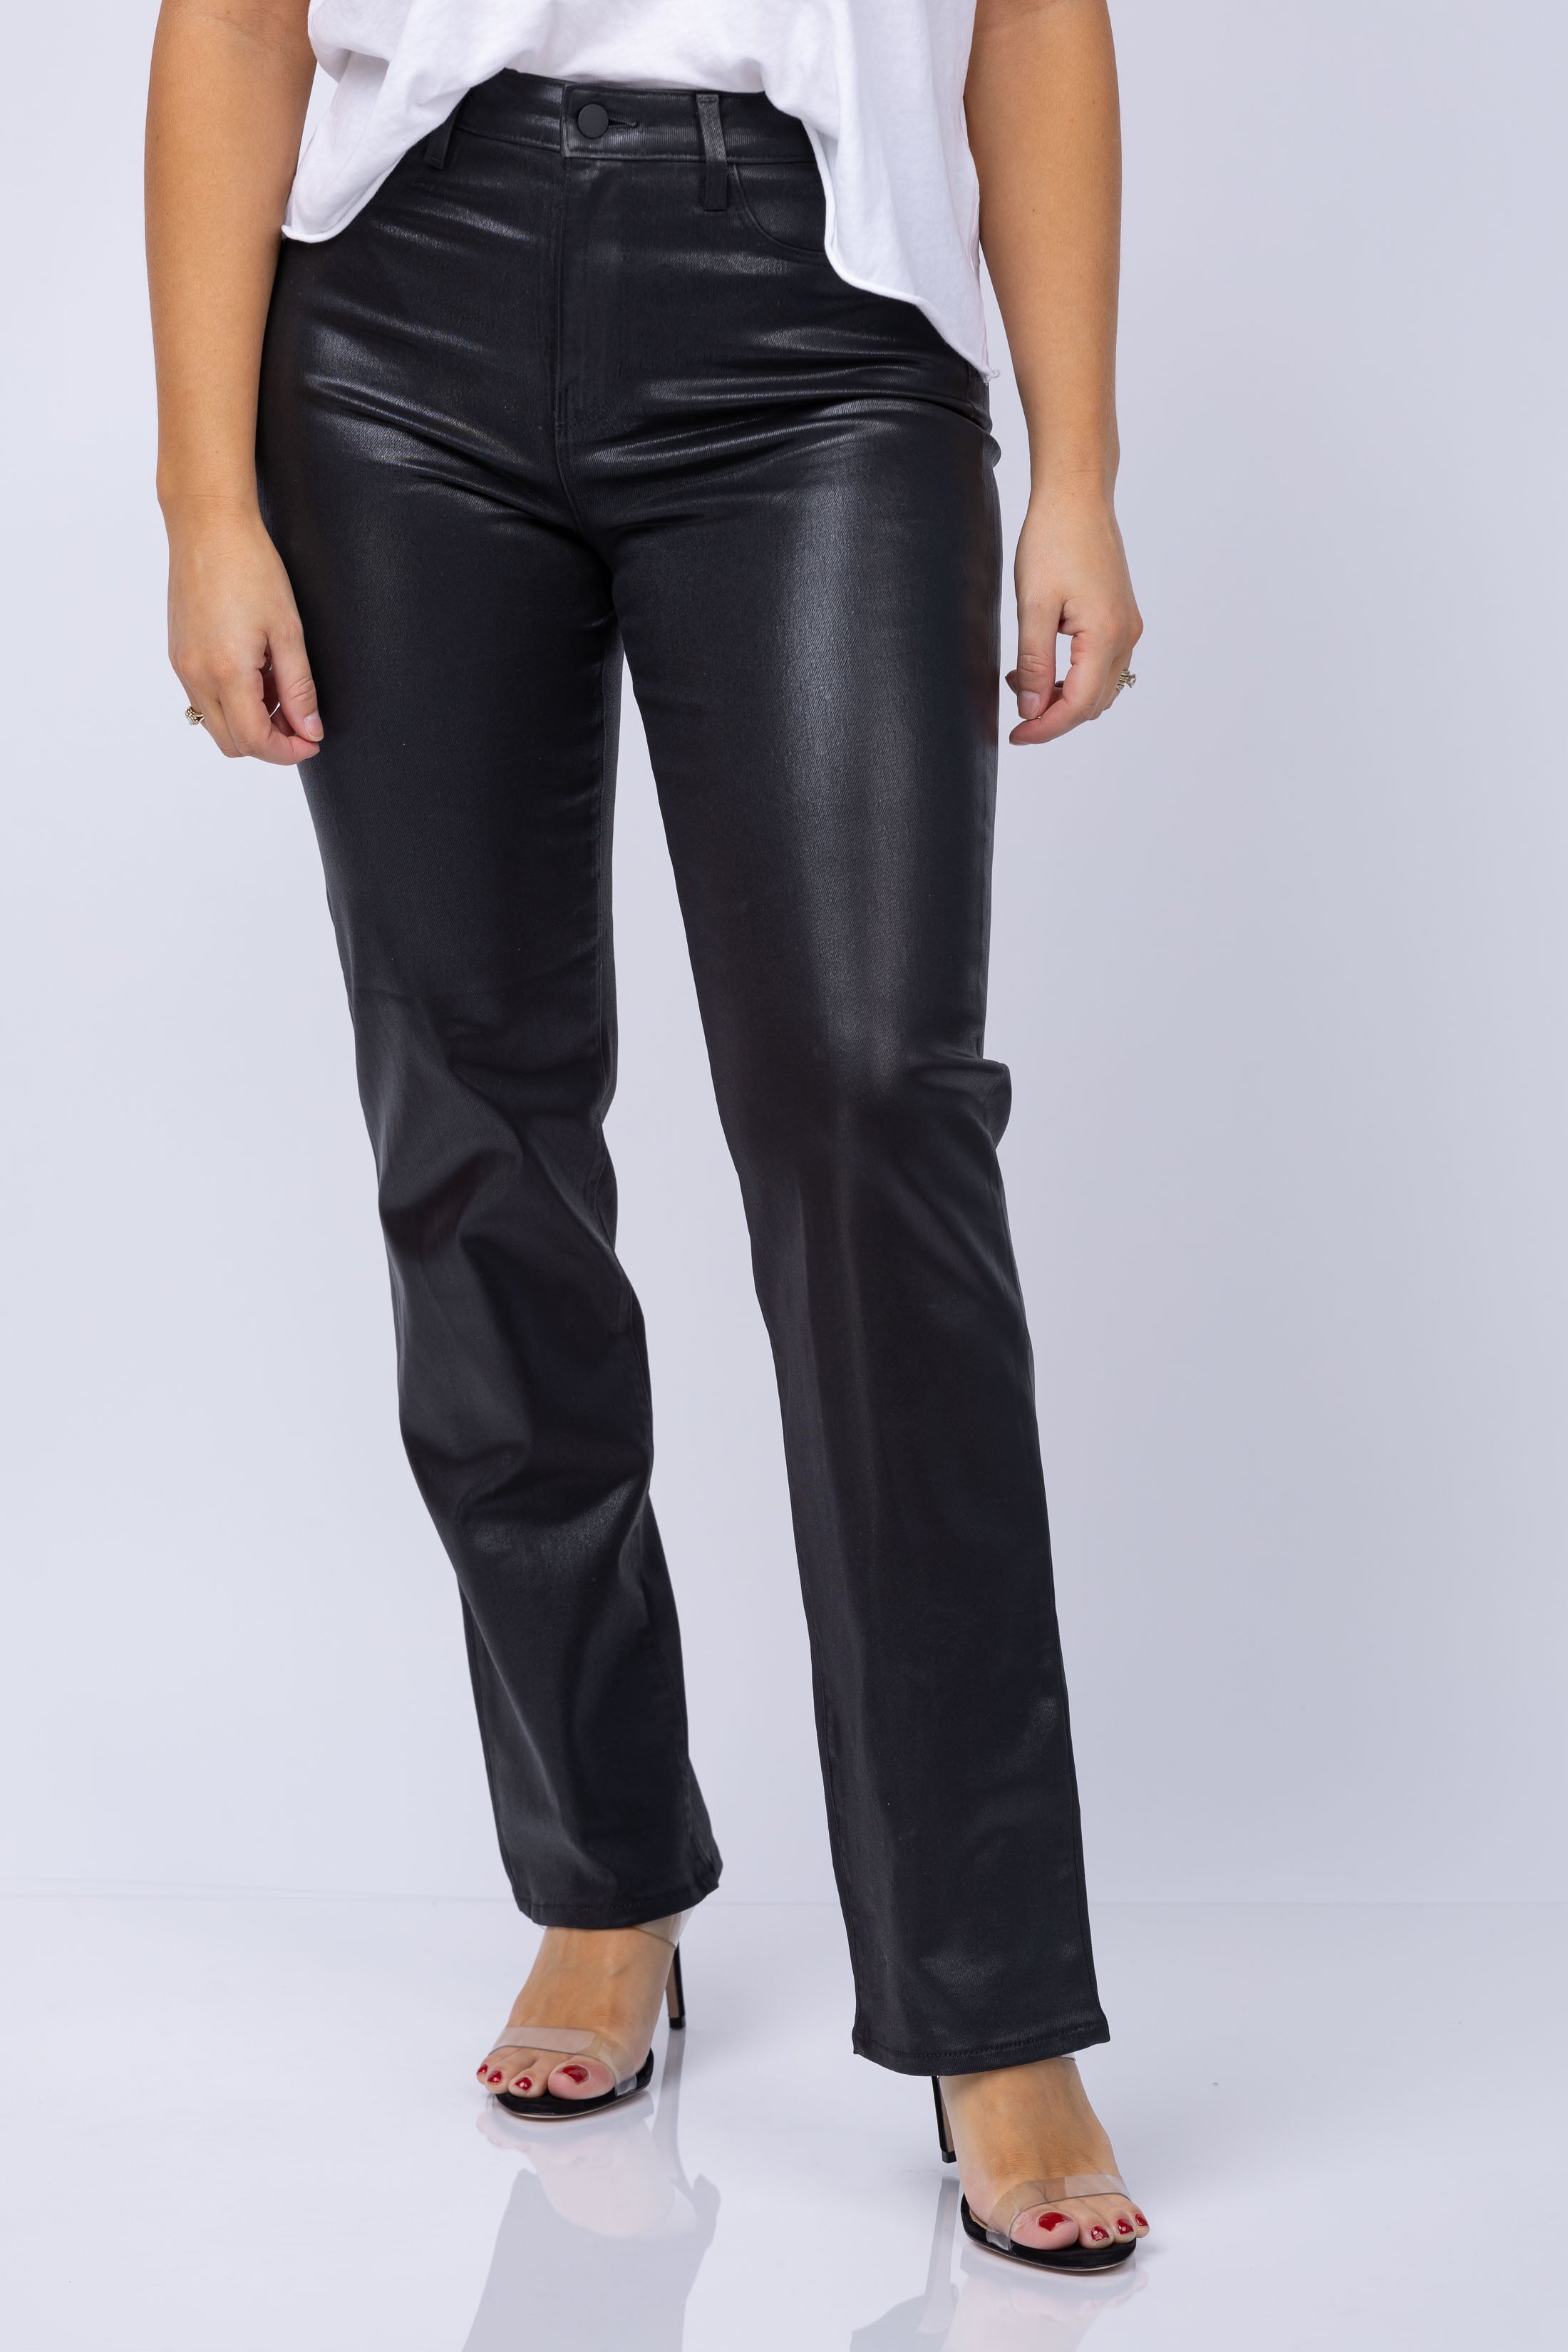 High Waist Zipper Casual Wide Leg Pants, हाई वेस्टेड पैंट - Peekay  International Ltd., Mumbai | ID: 25967672397